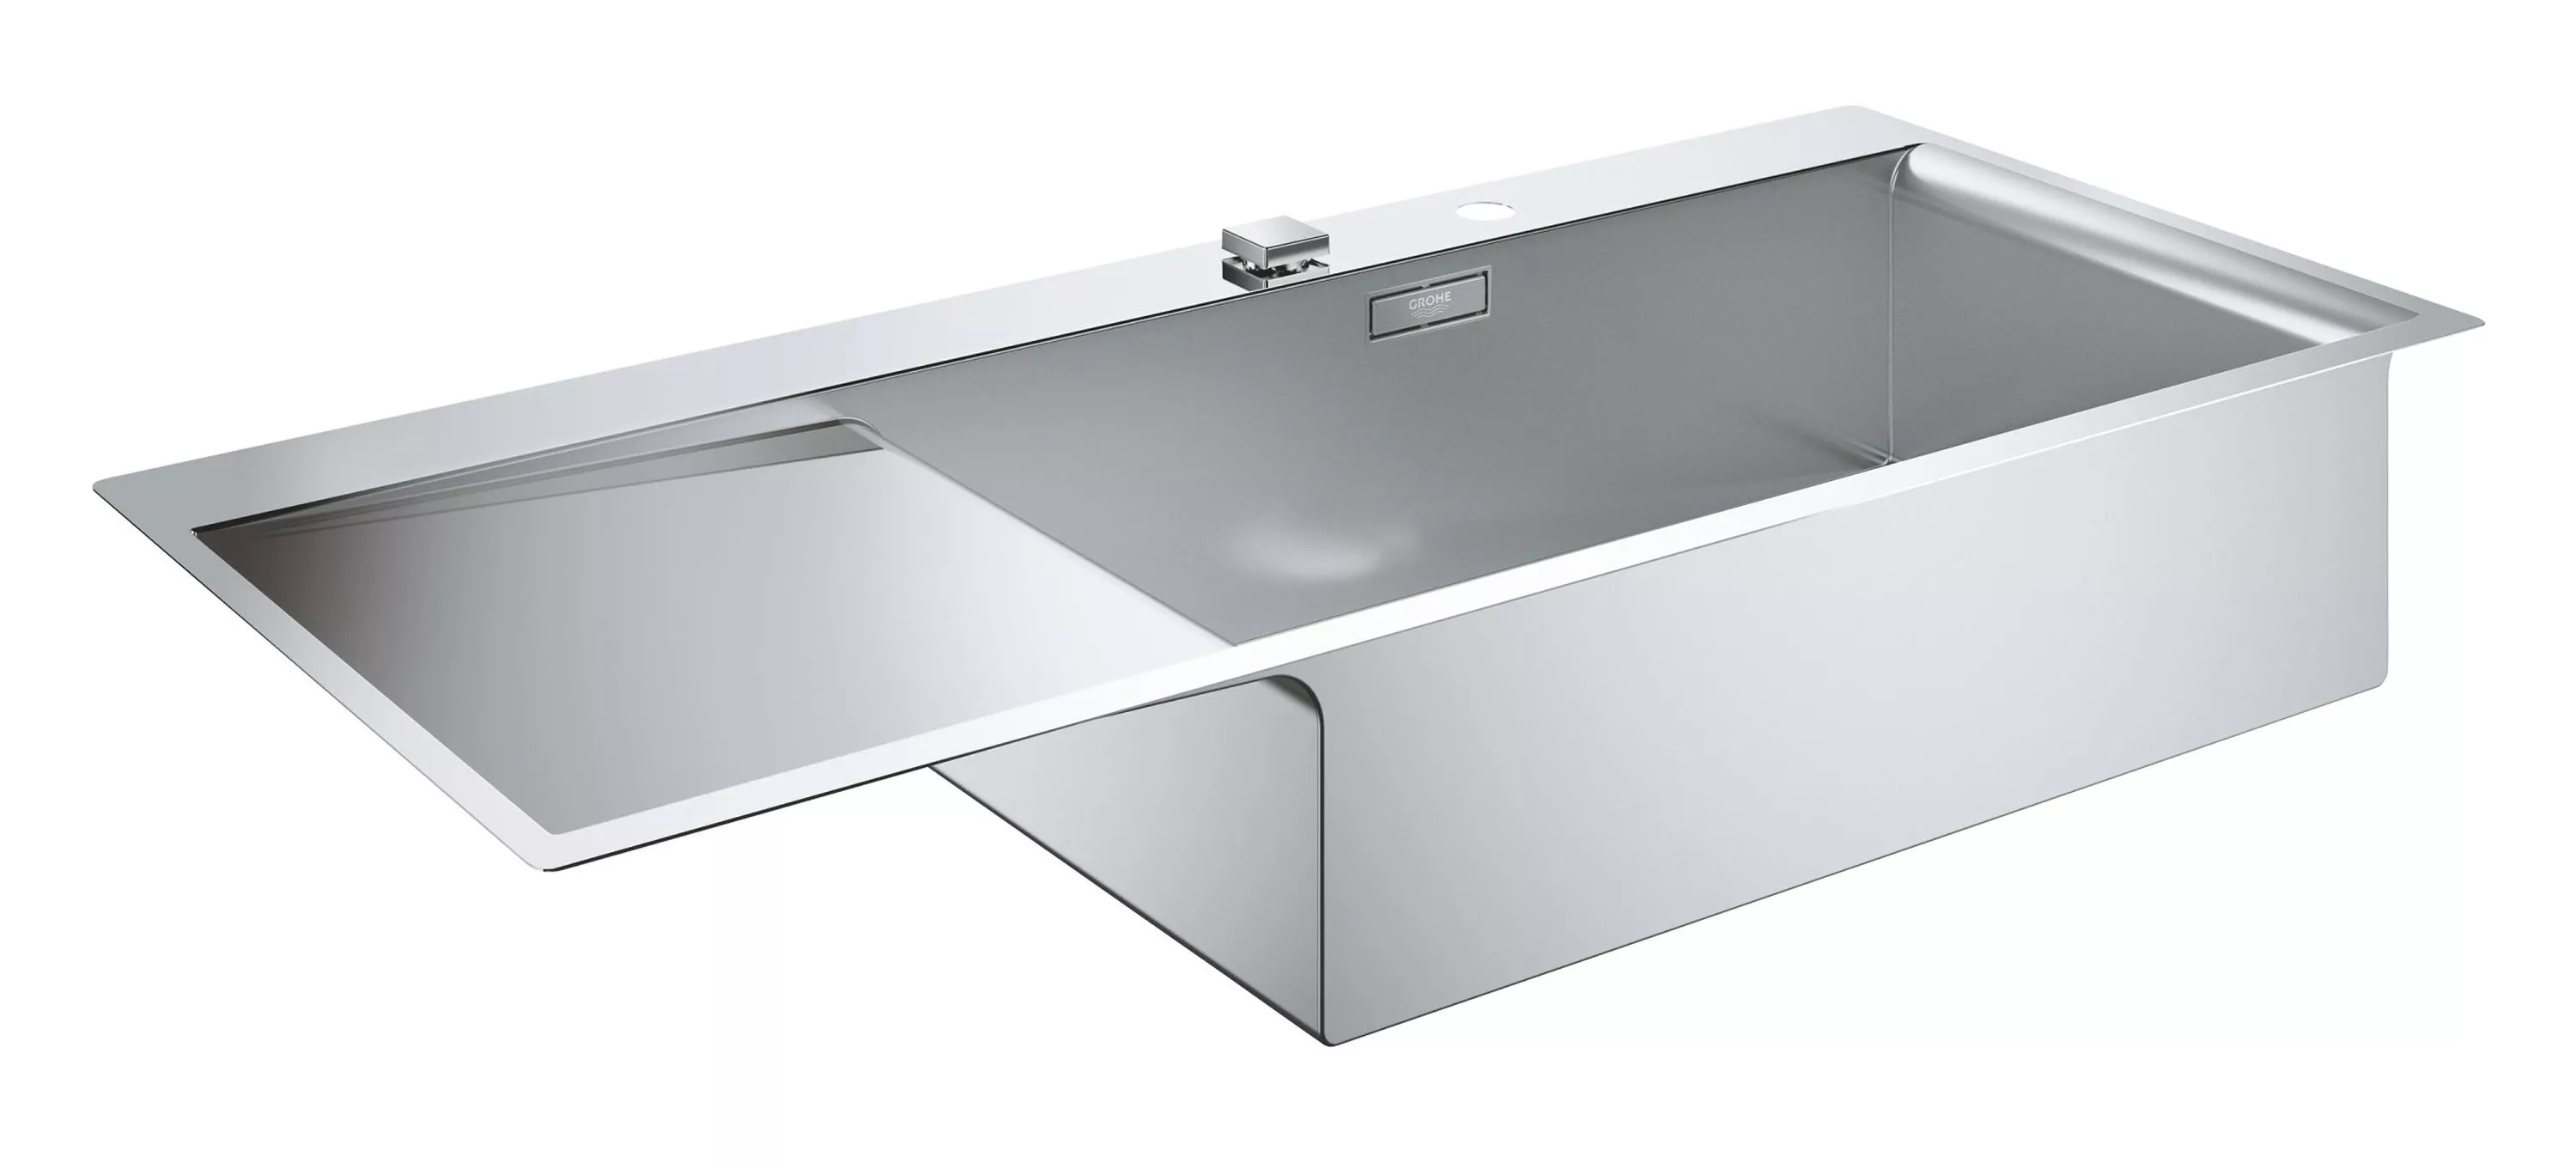 Кухонный смеситель Grohe Eurosmart Cosmopolitan + Кухонная мойка Grohe EX Sink K1000 31582SD032843002 (32843002 + 31582SD0) цена